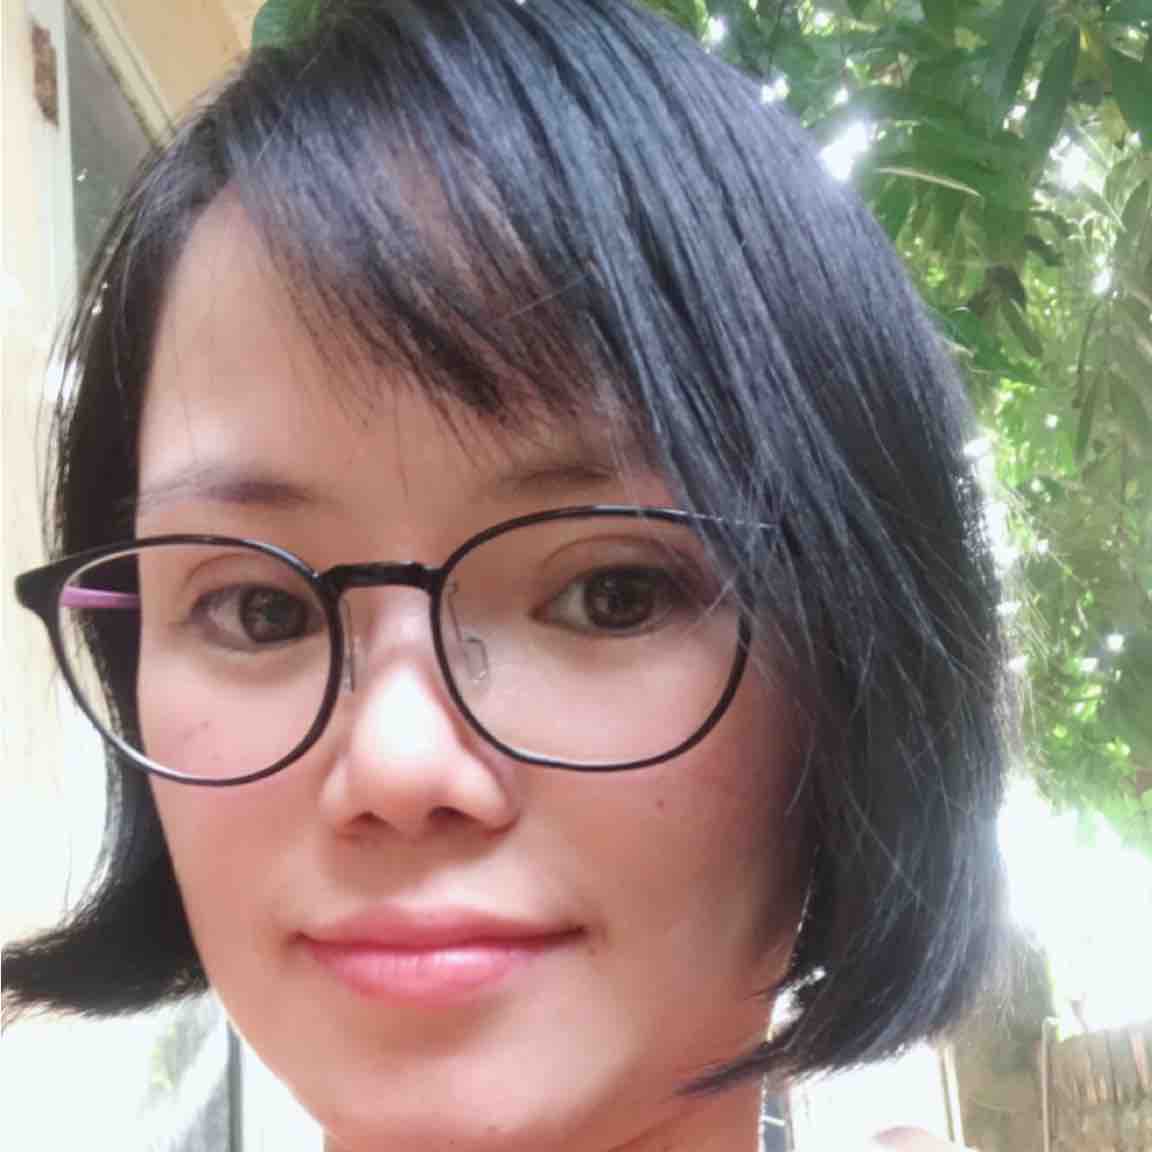 Thanh Cuong Nguyen